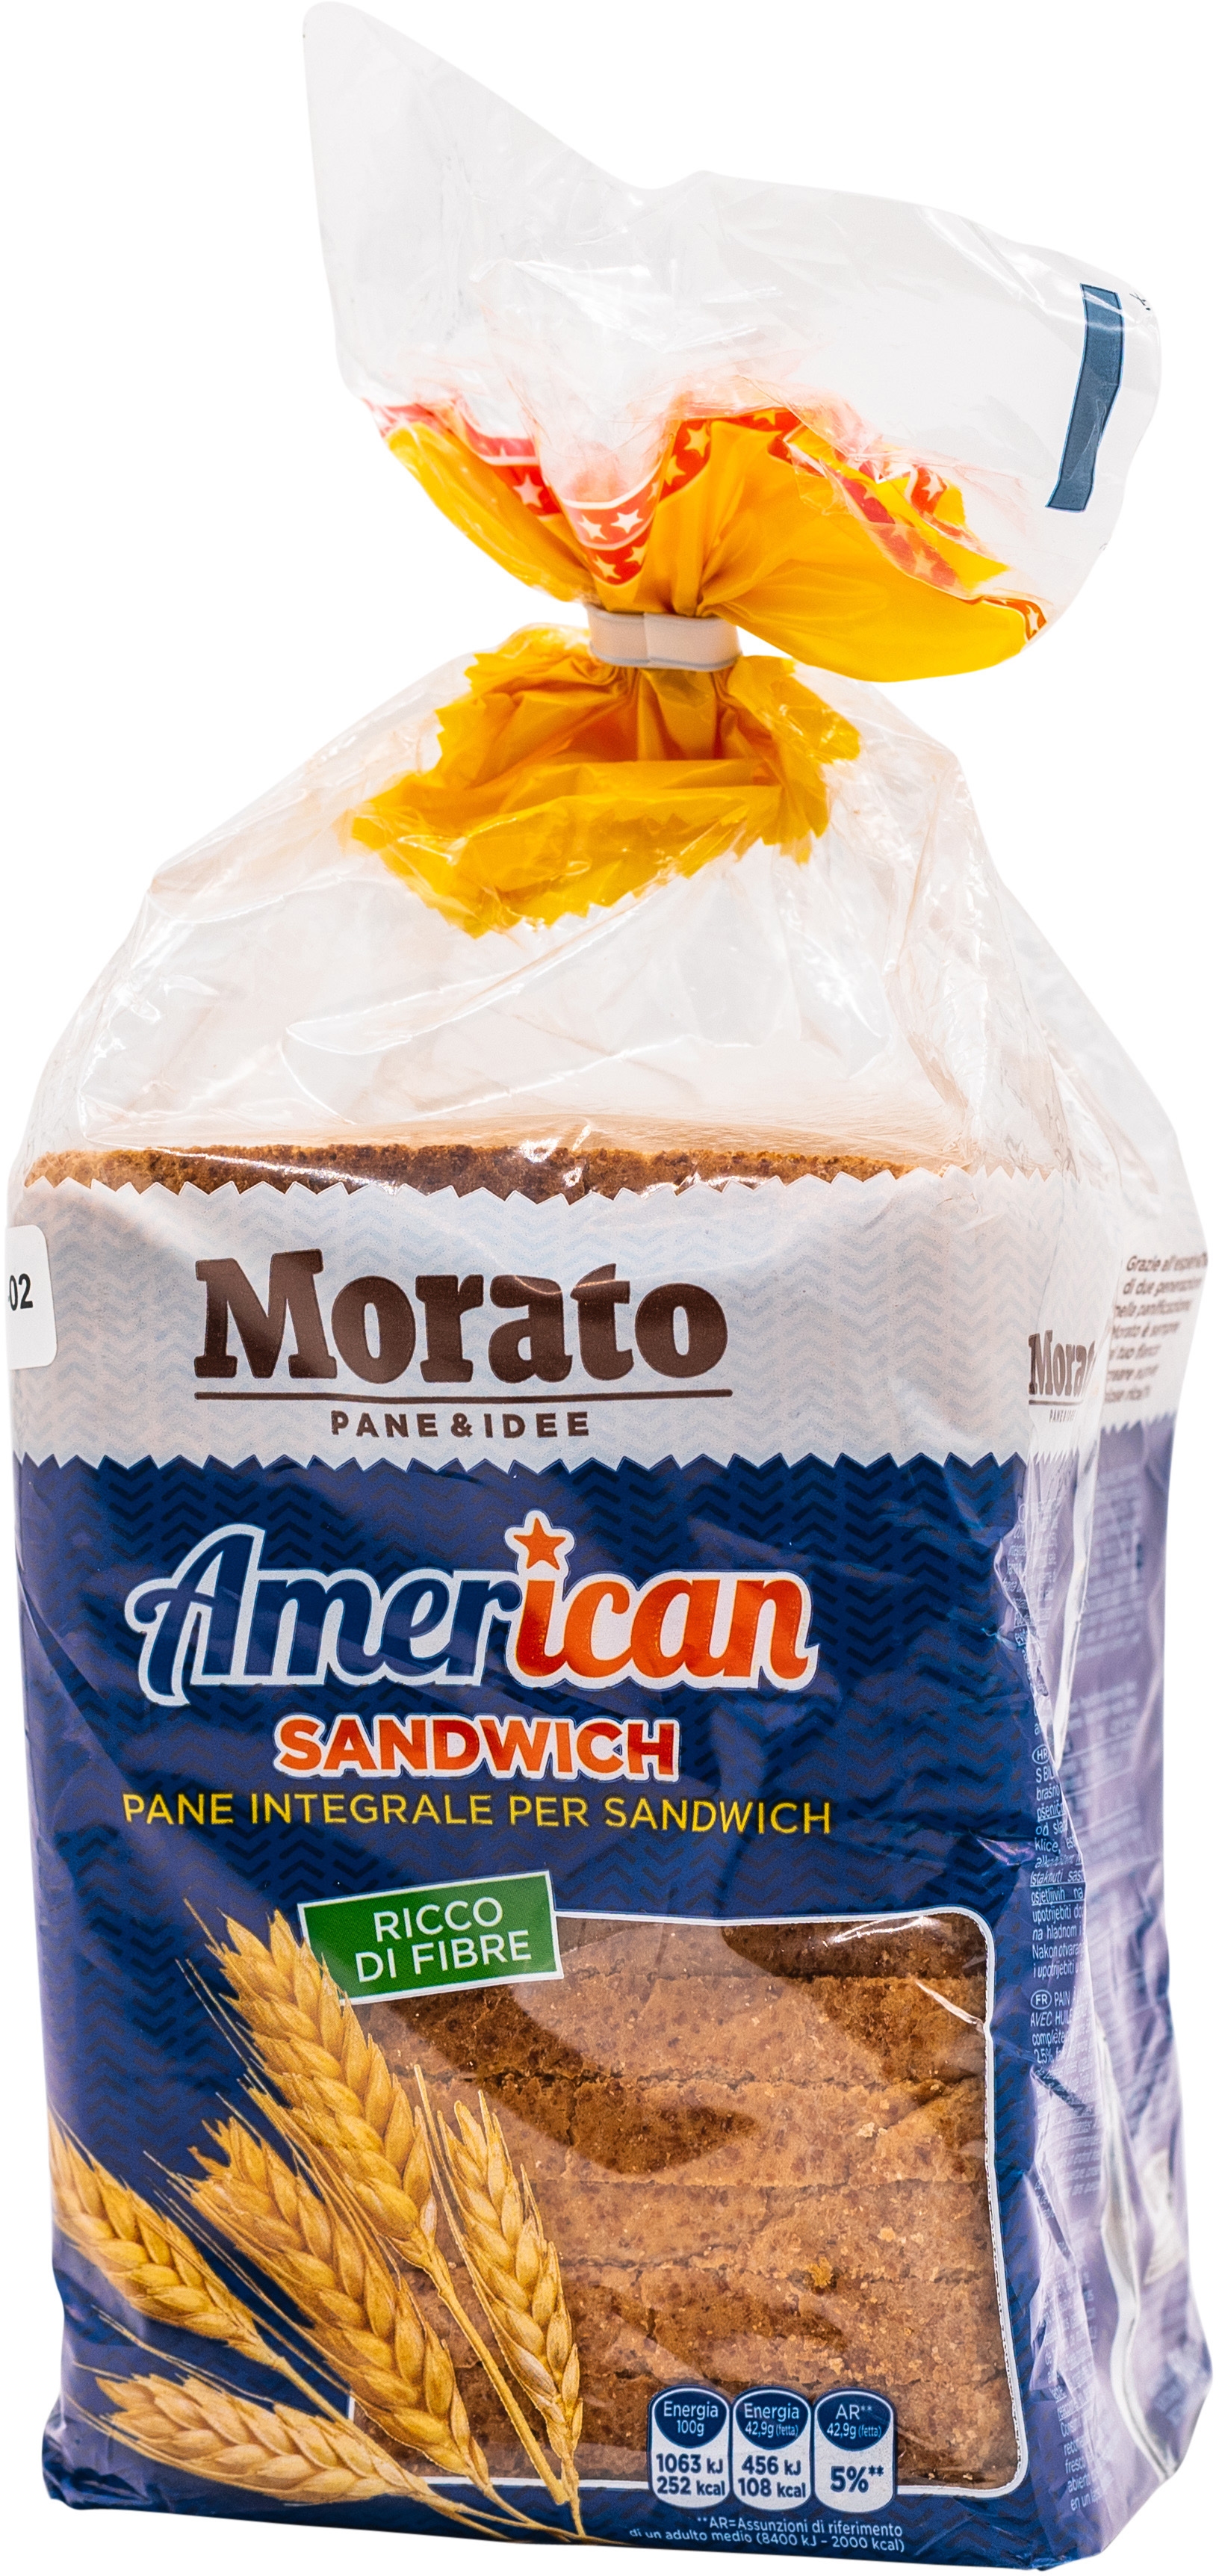 AMERICAN SANDWICH PANE INTEGRALE